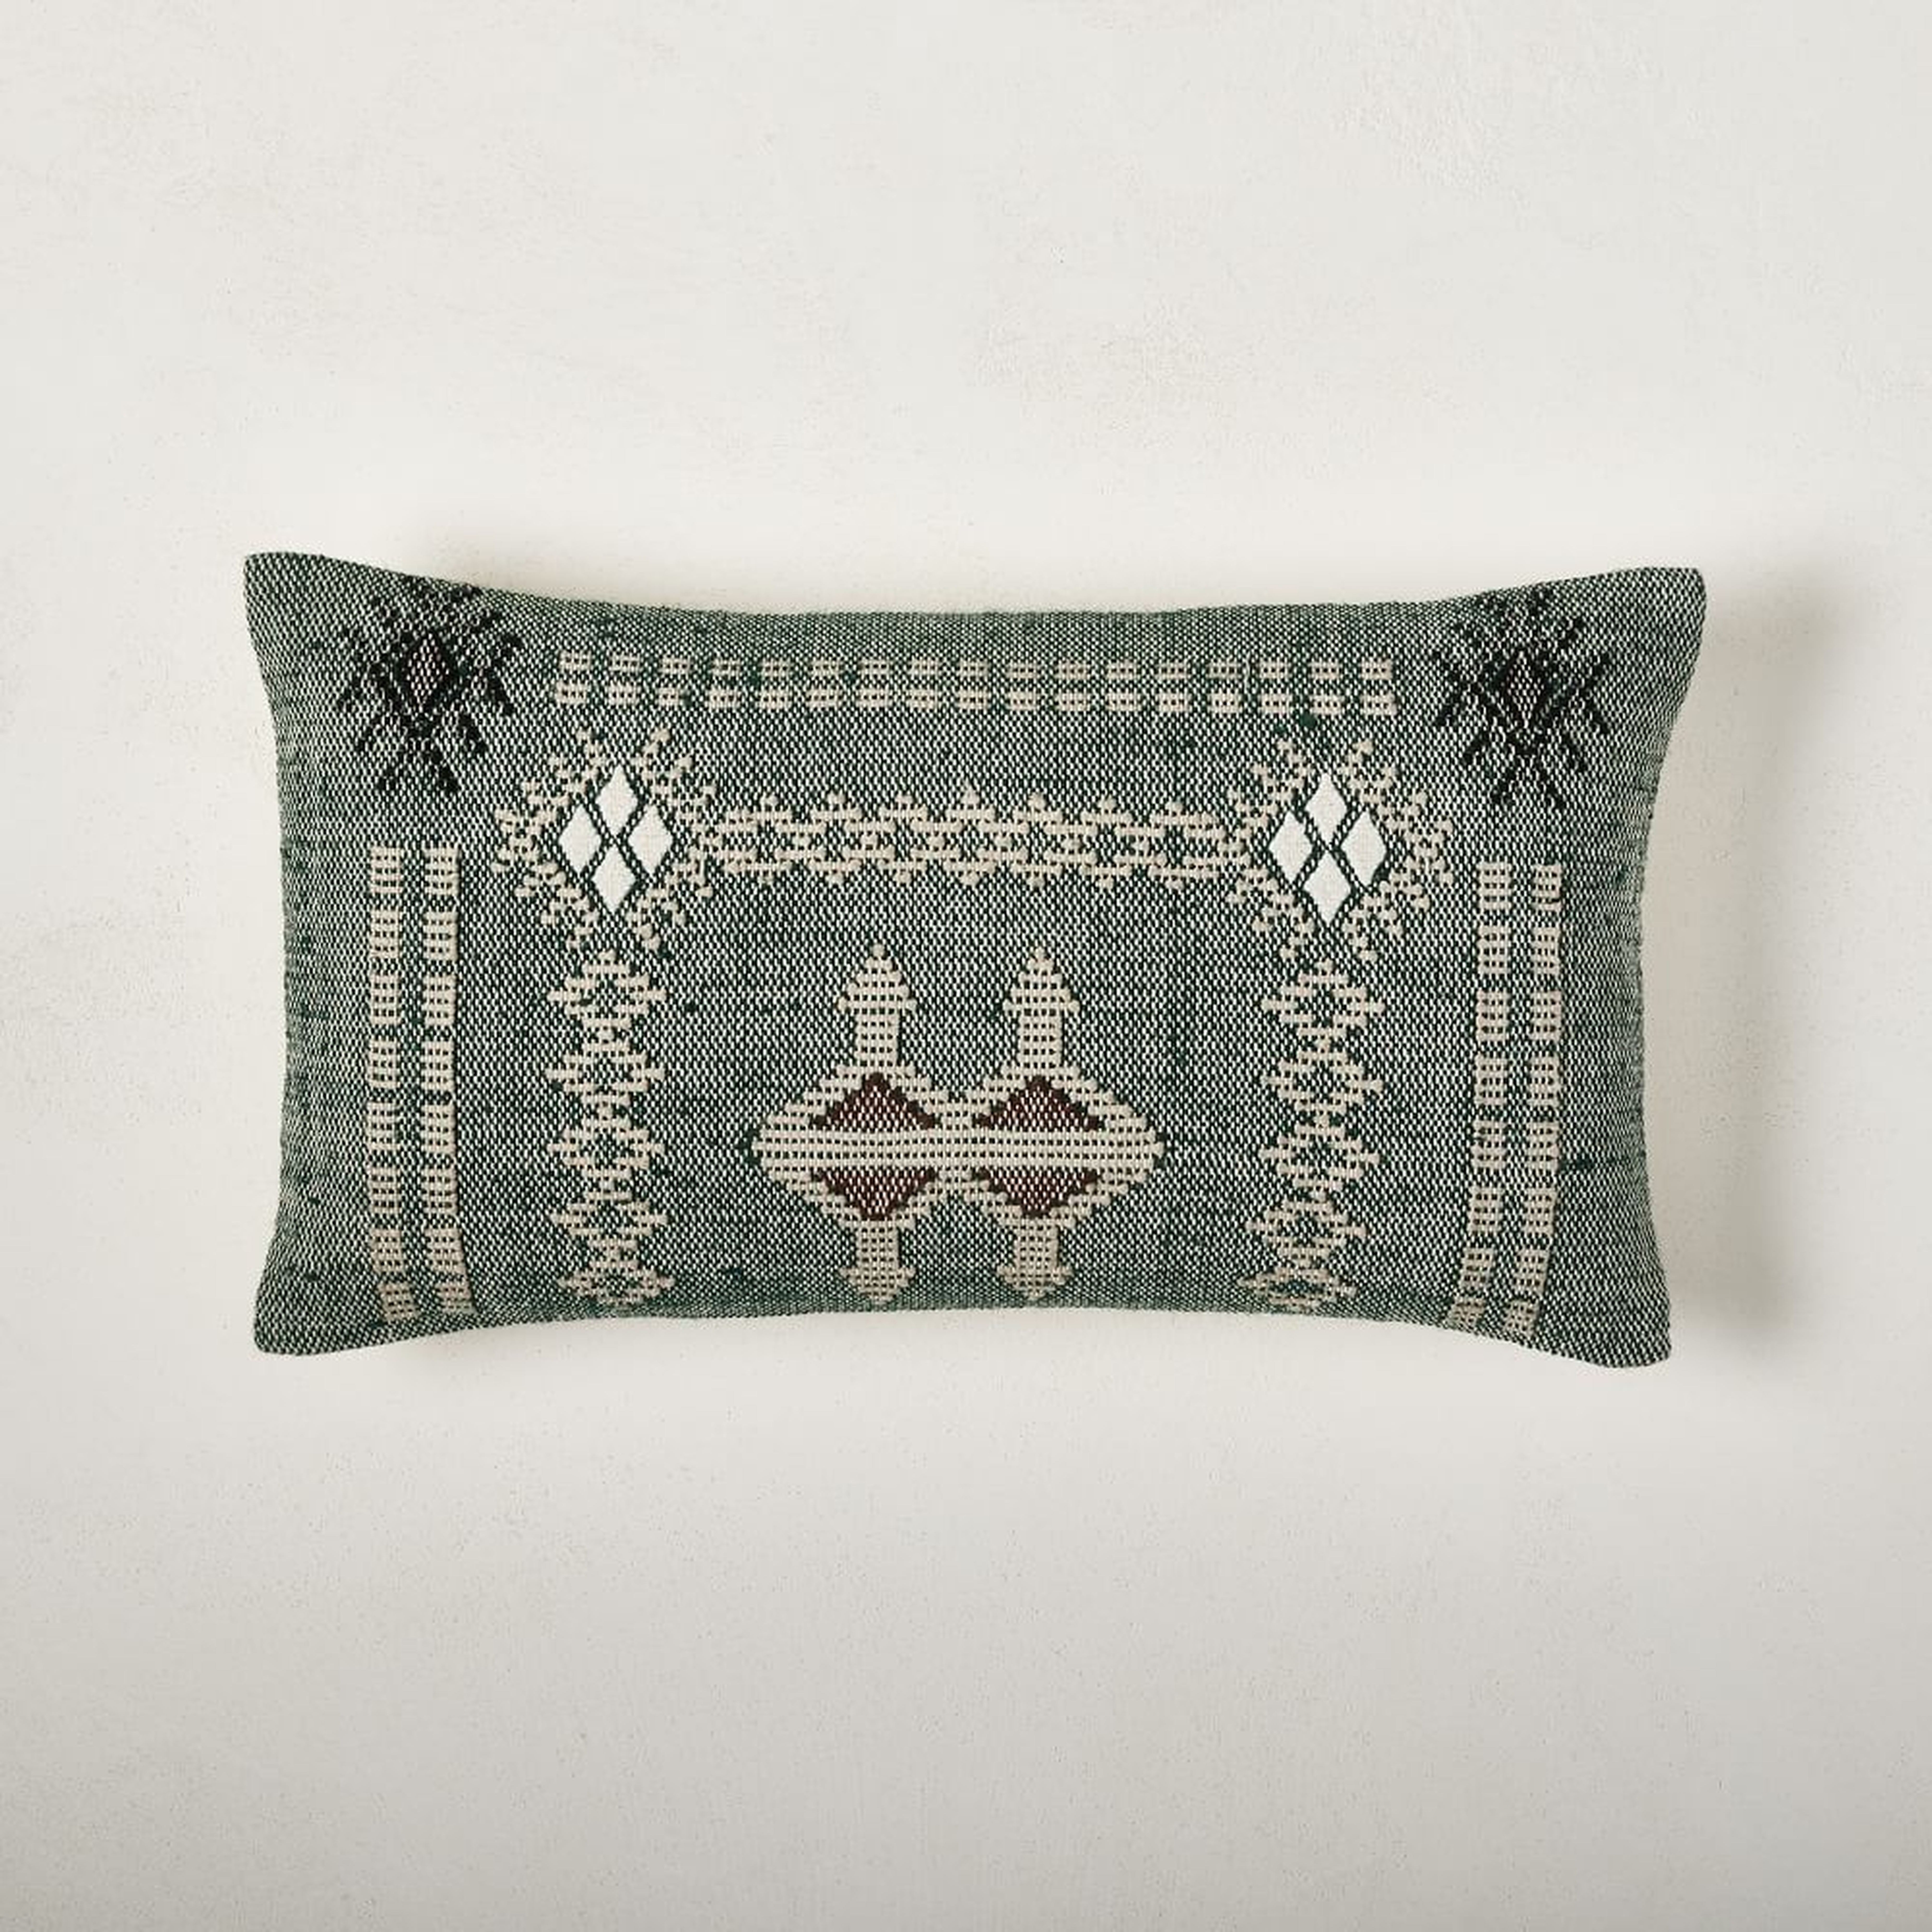 Framed Moroccan Woven Pillow Cover, 12"x21", Light Green Gables - West Elm